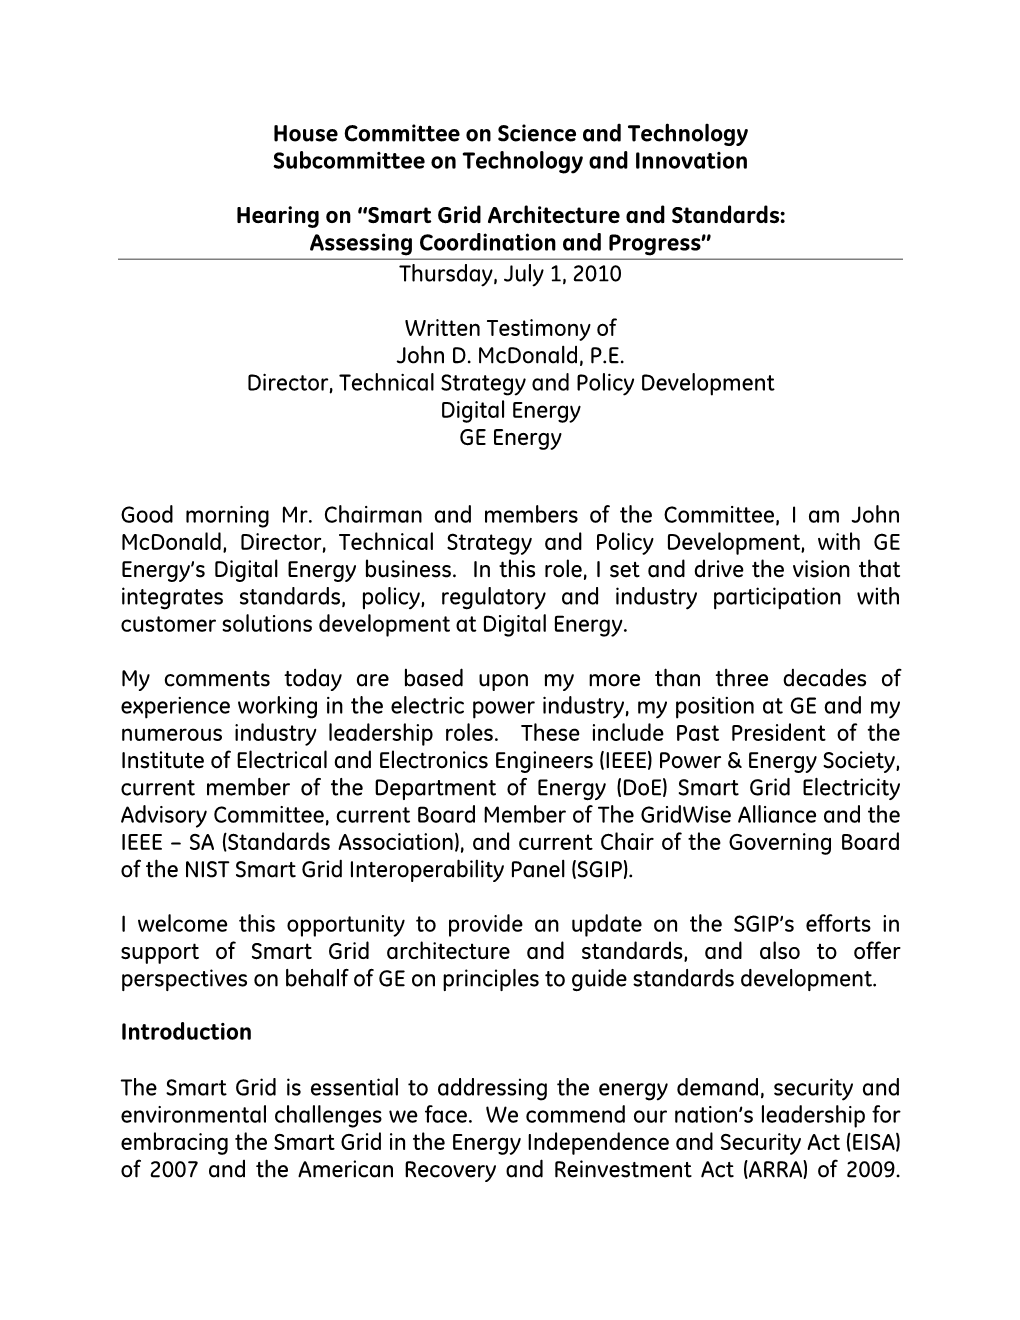 Written Testimony of John D. Mcdonald, P.E. Director, Technical Strategy and Policy Development Digital Energy GE Energy